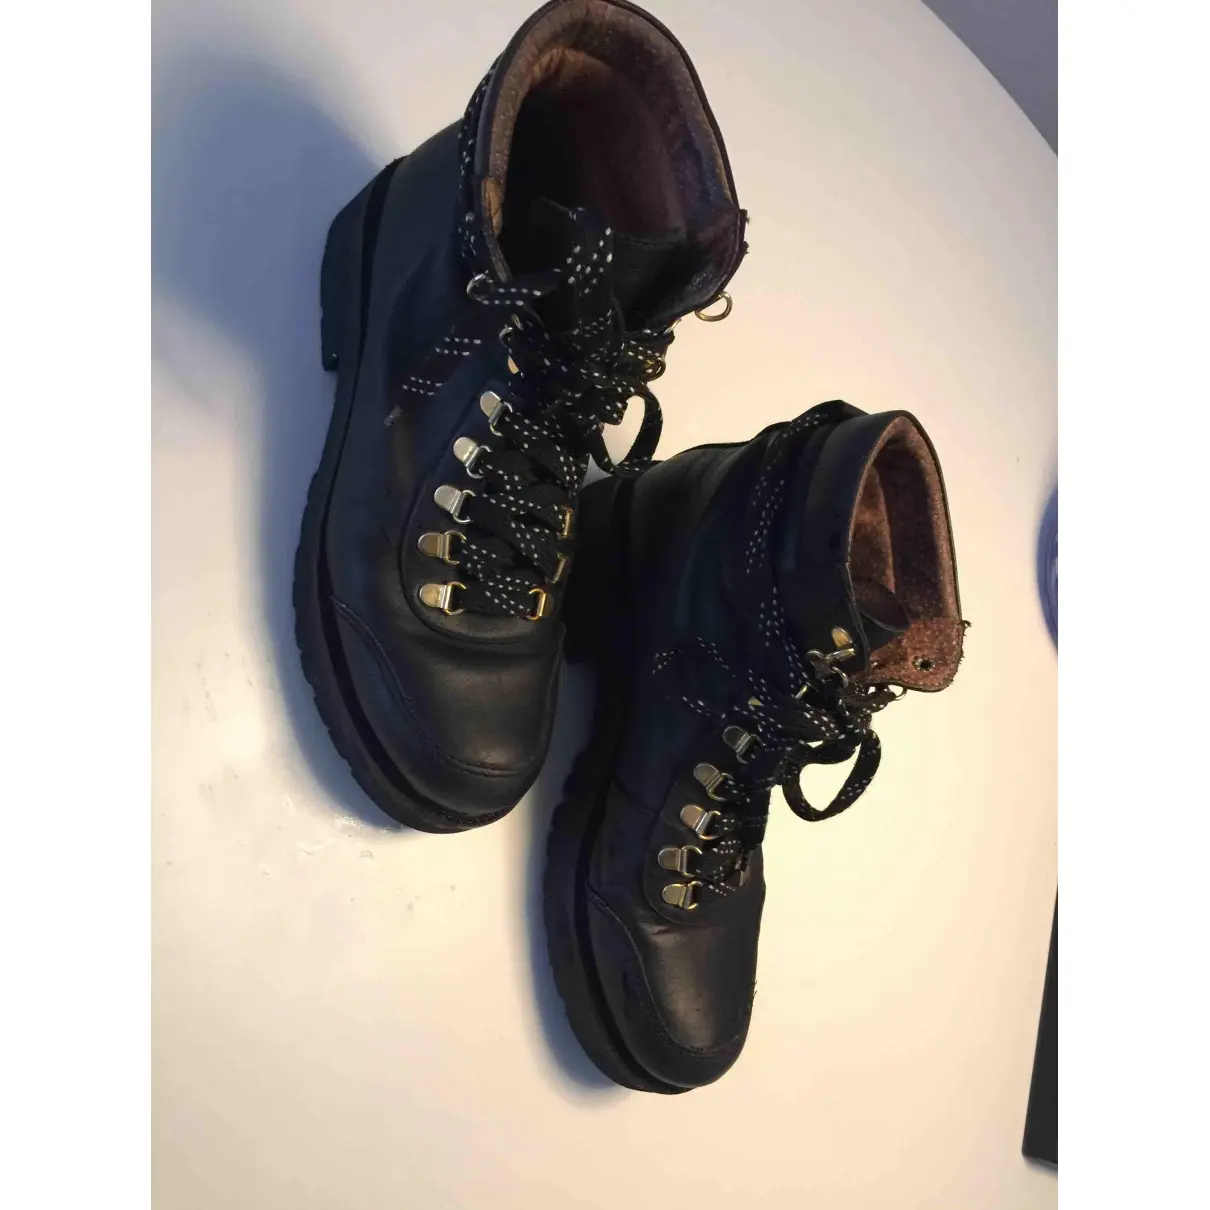 Buy Gestuz Leather snow boots online